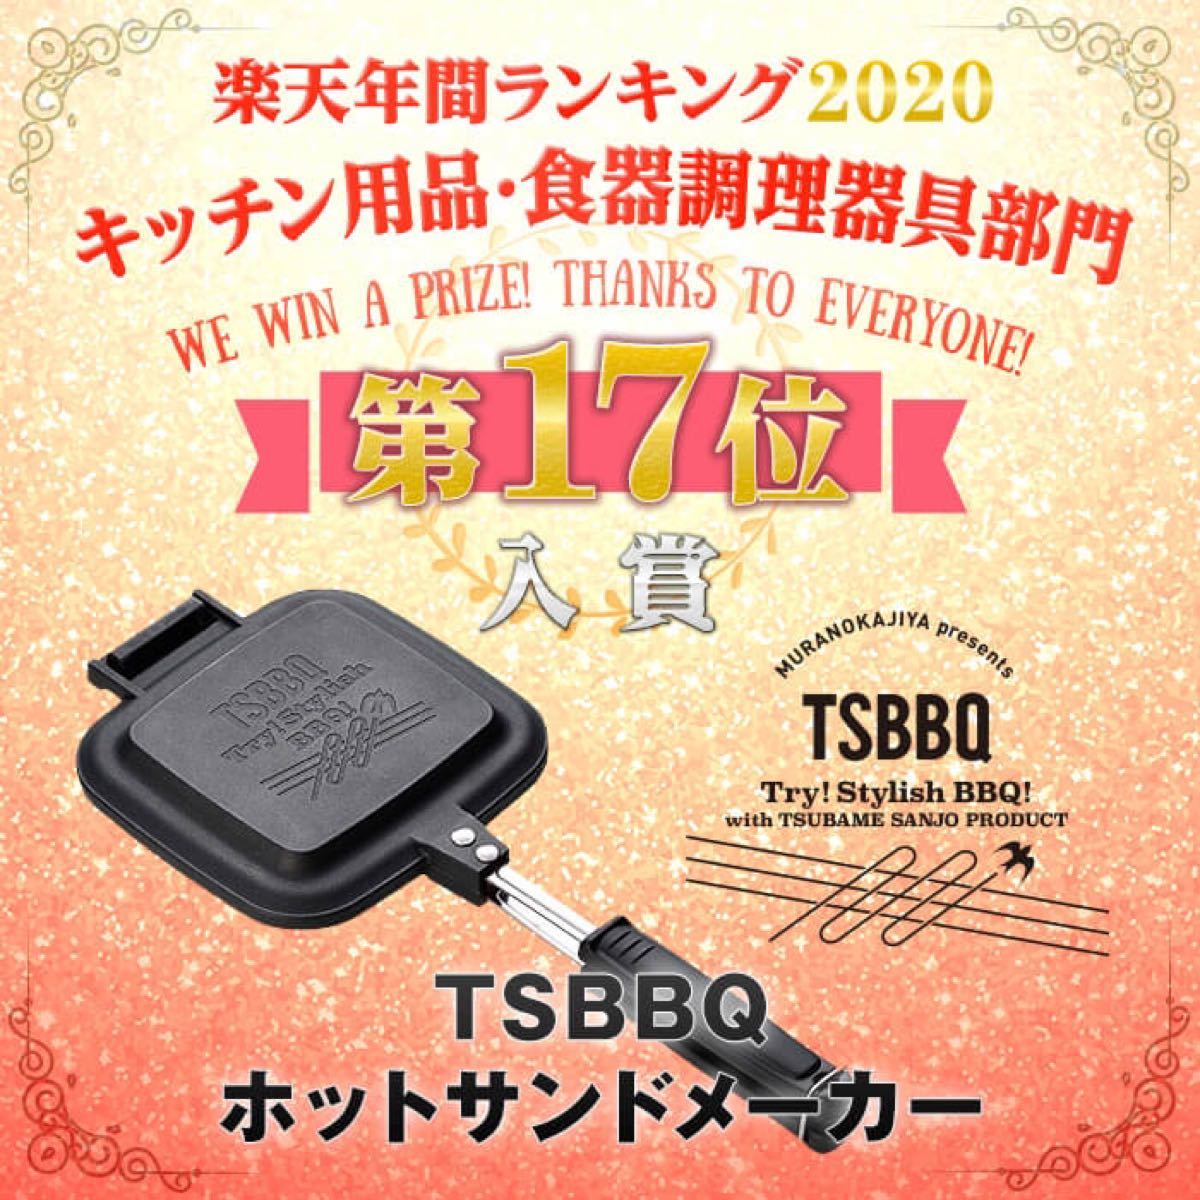 TSBBQ ホットサンドメーカー 【燕三条製】 TSBBQ-004